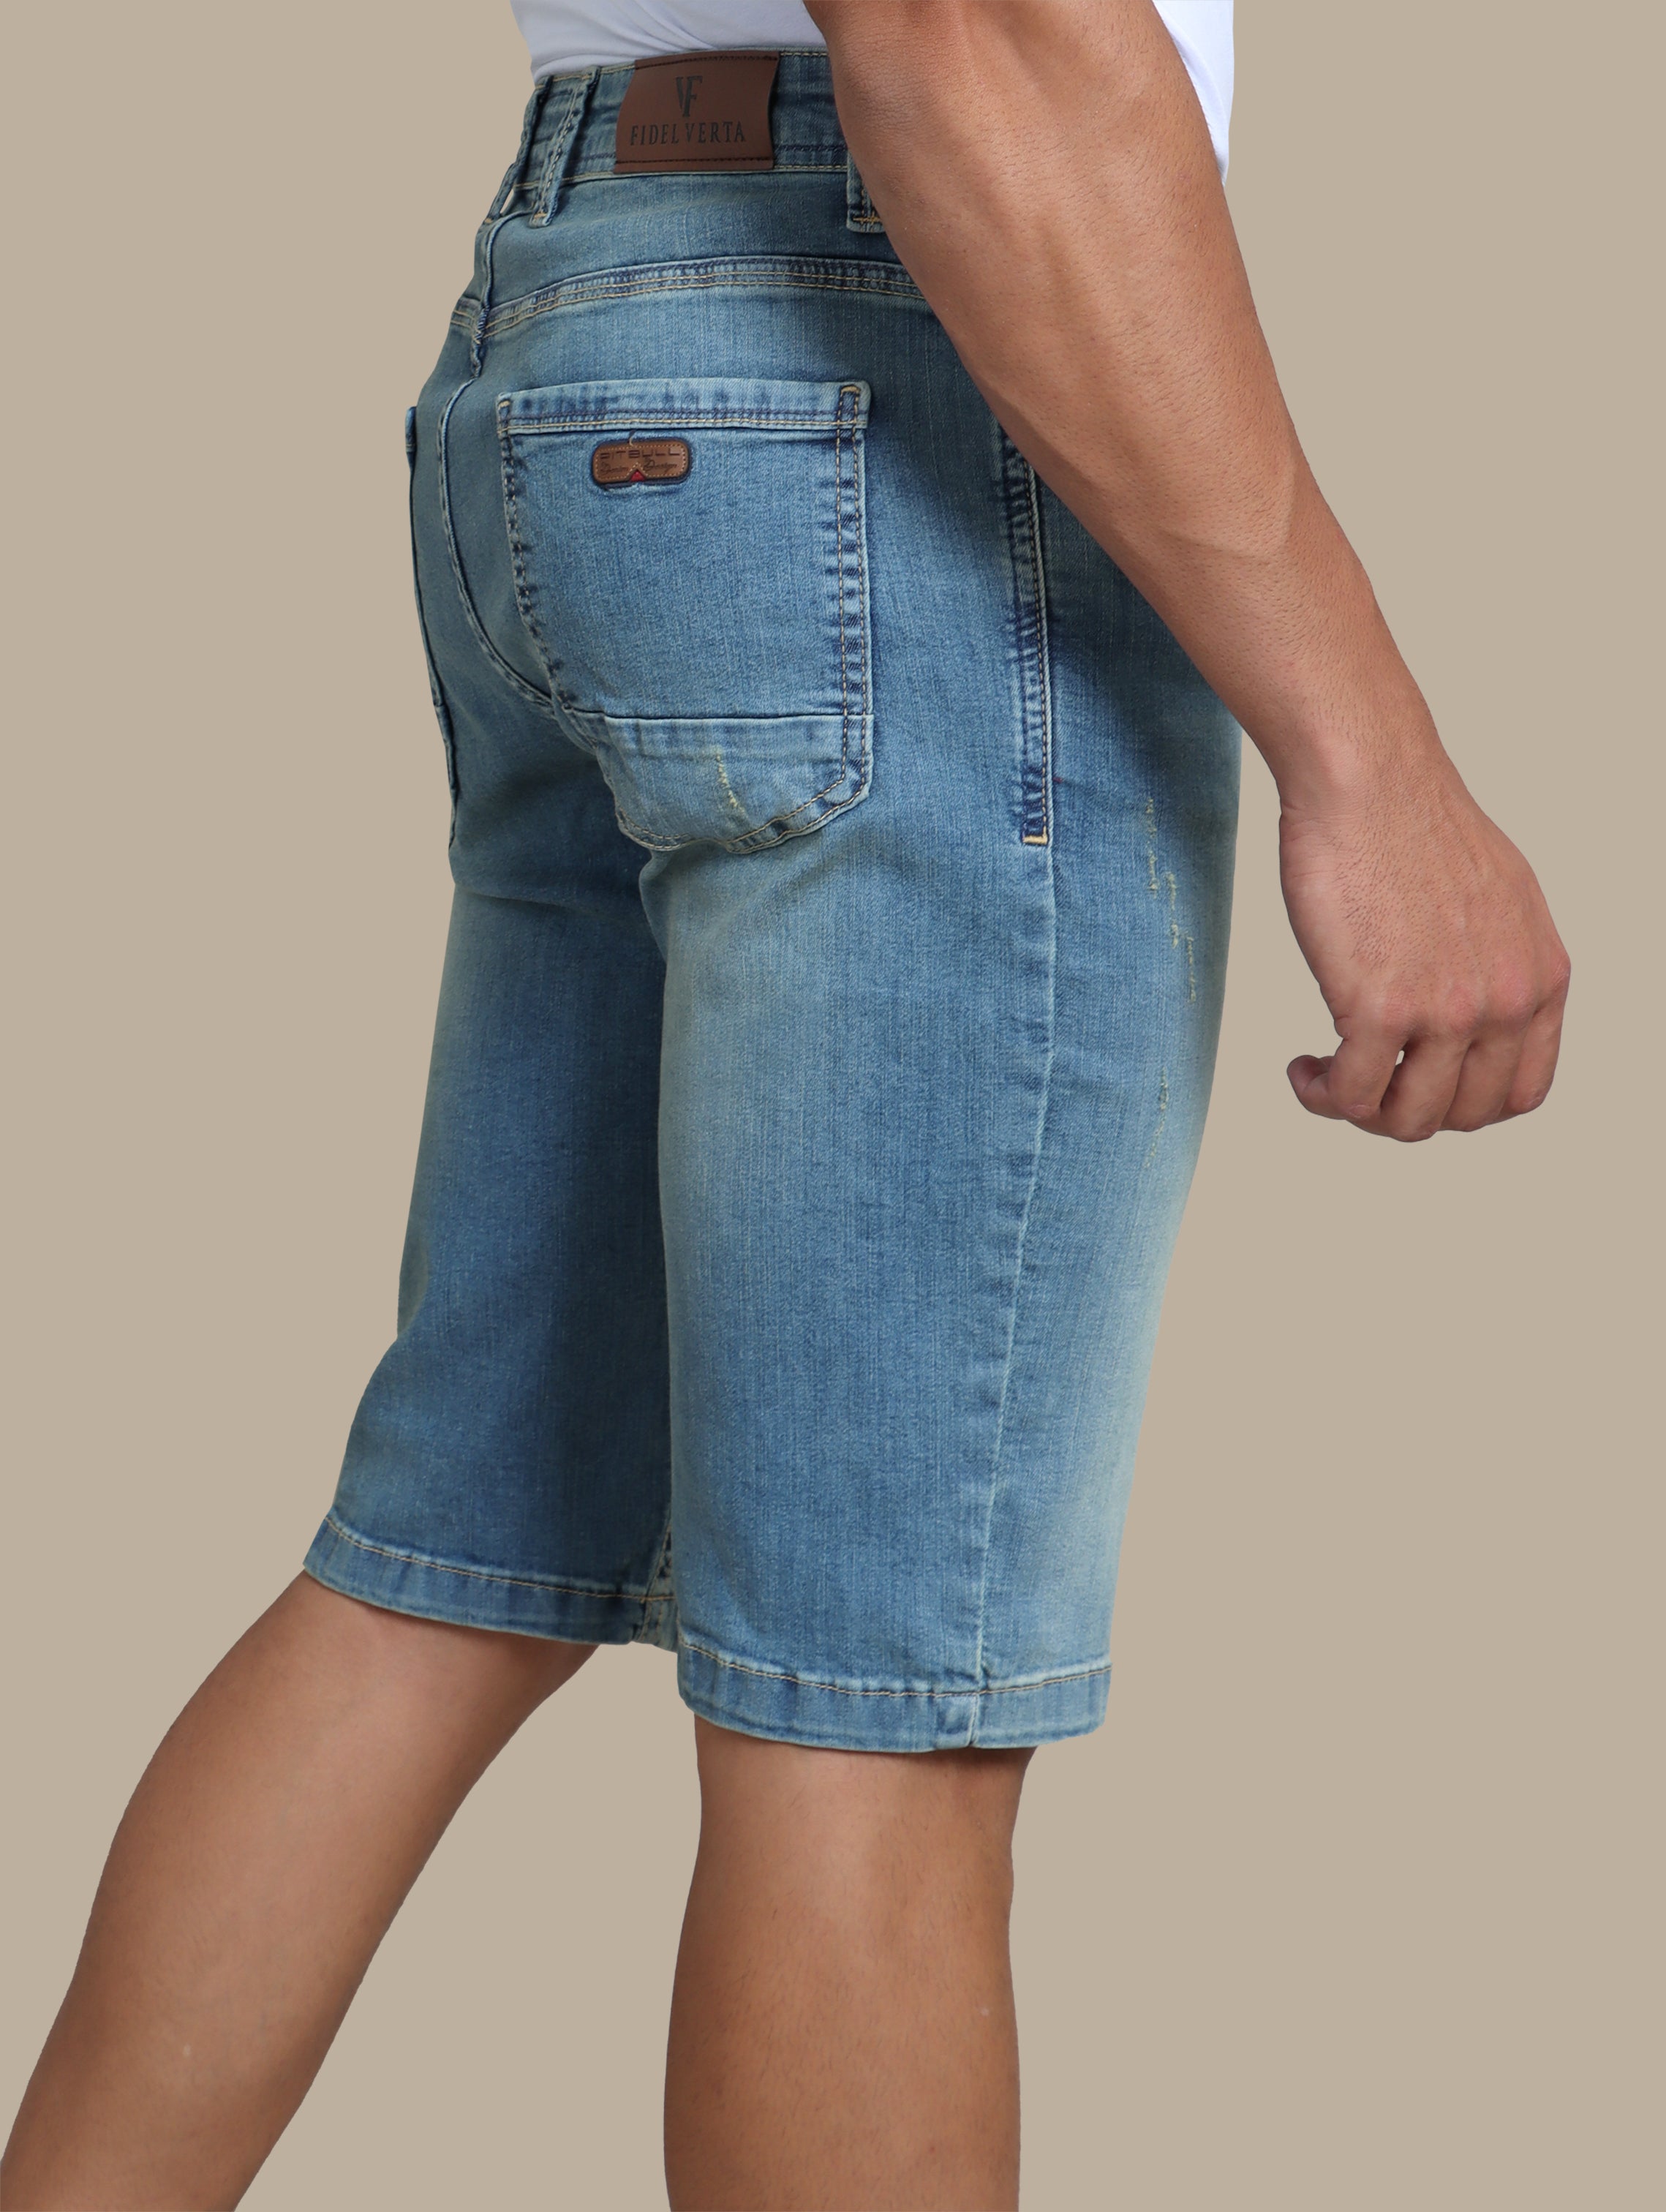 Classic Comfort: Light Blue Regular Fit Denim Shorts